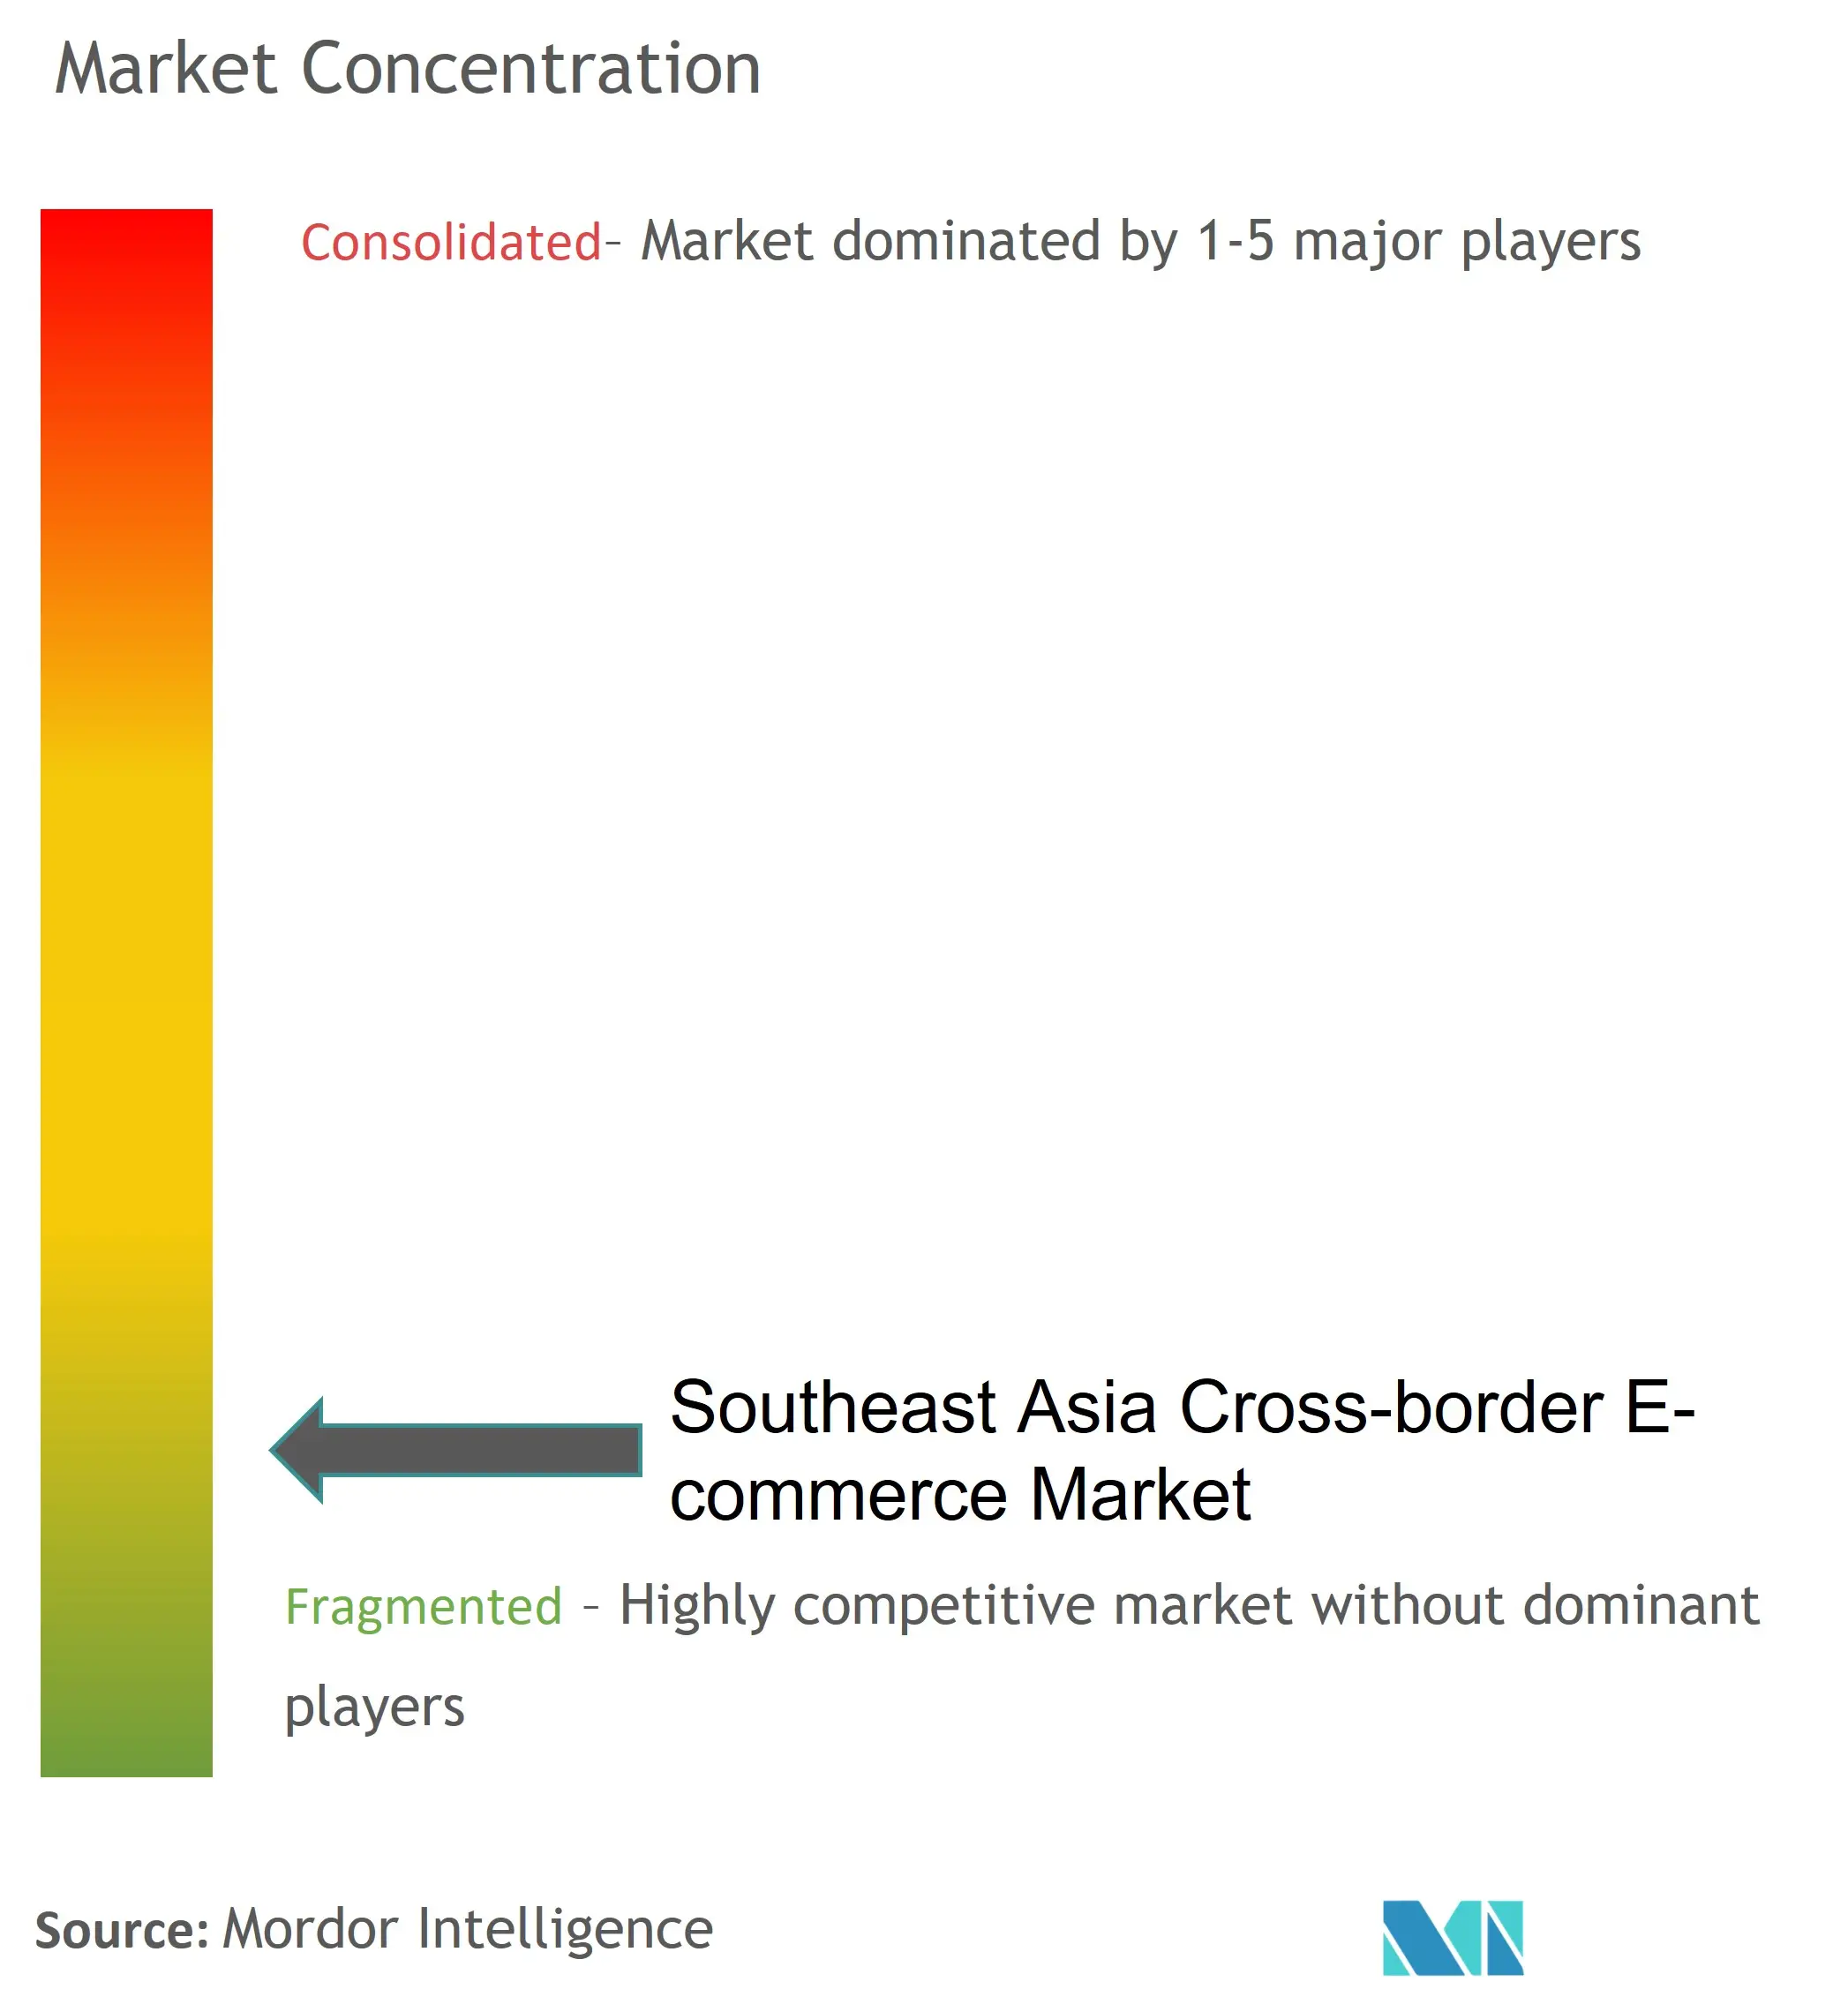 Southeast Asia Cross-border E-commerce Market Concentration